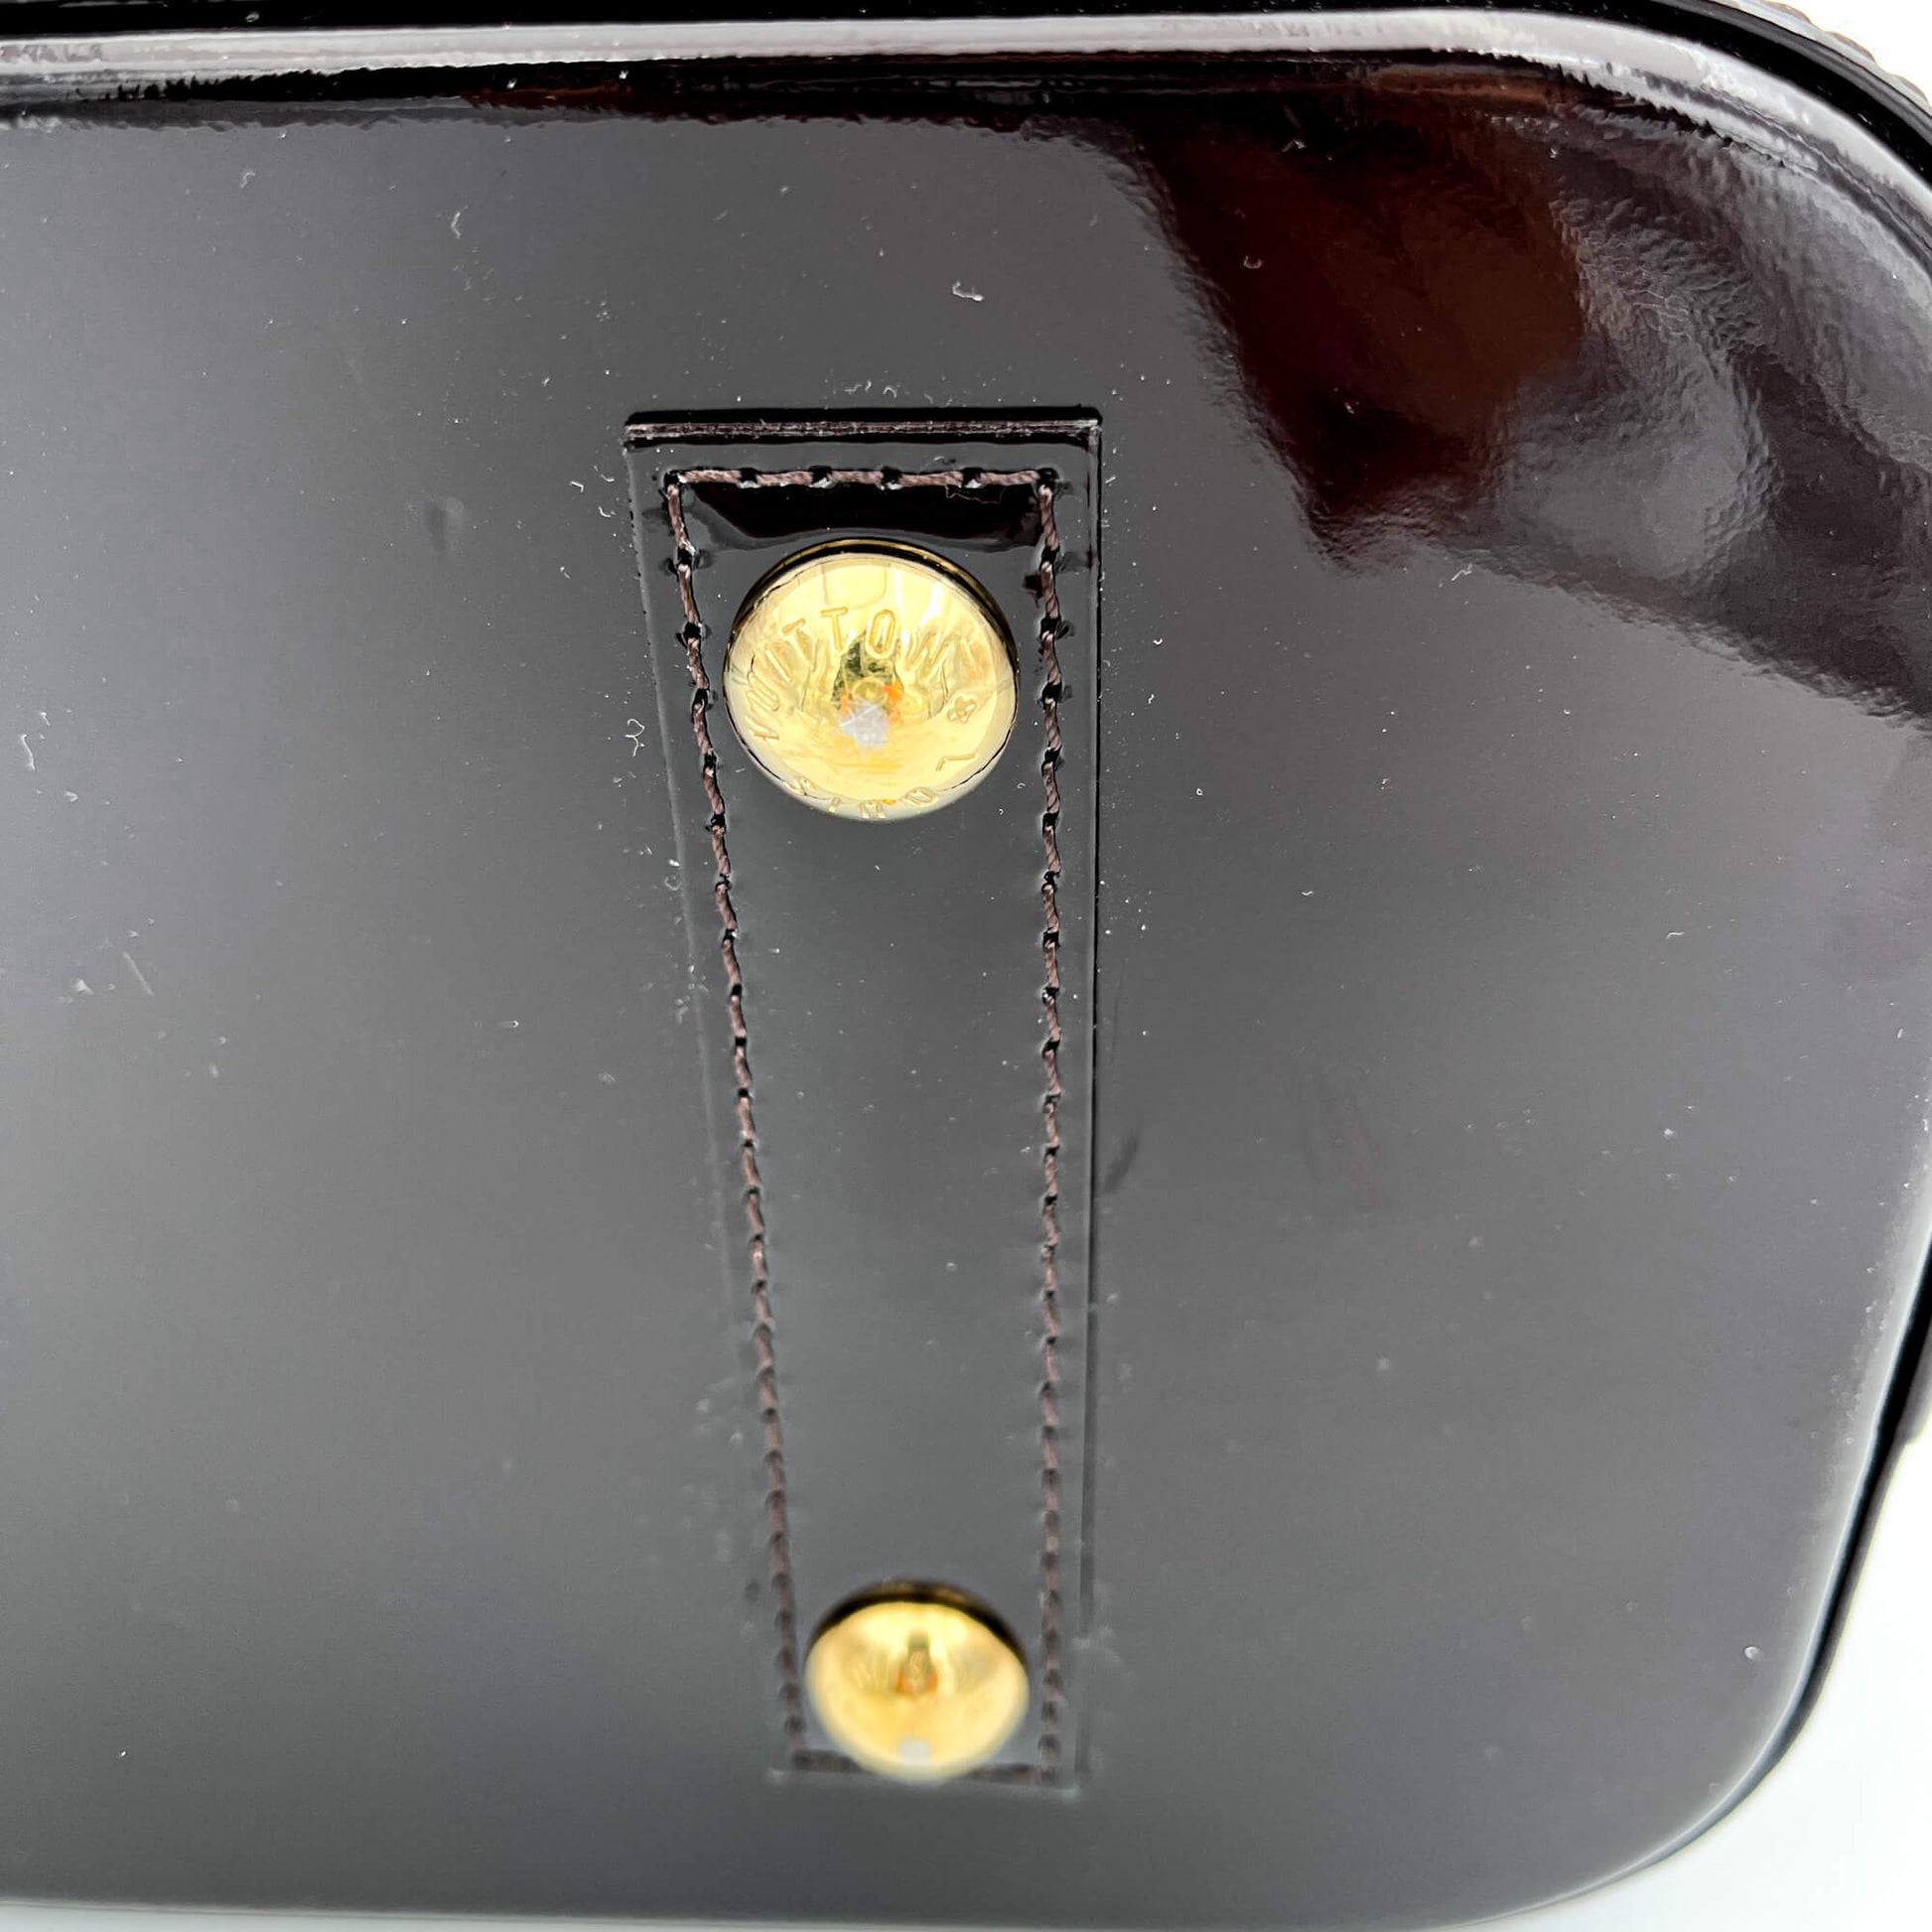 Louis Vuitton Alma PM Burgundy Patent Leather - Tabita Bags – Tabita Bags  with Love